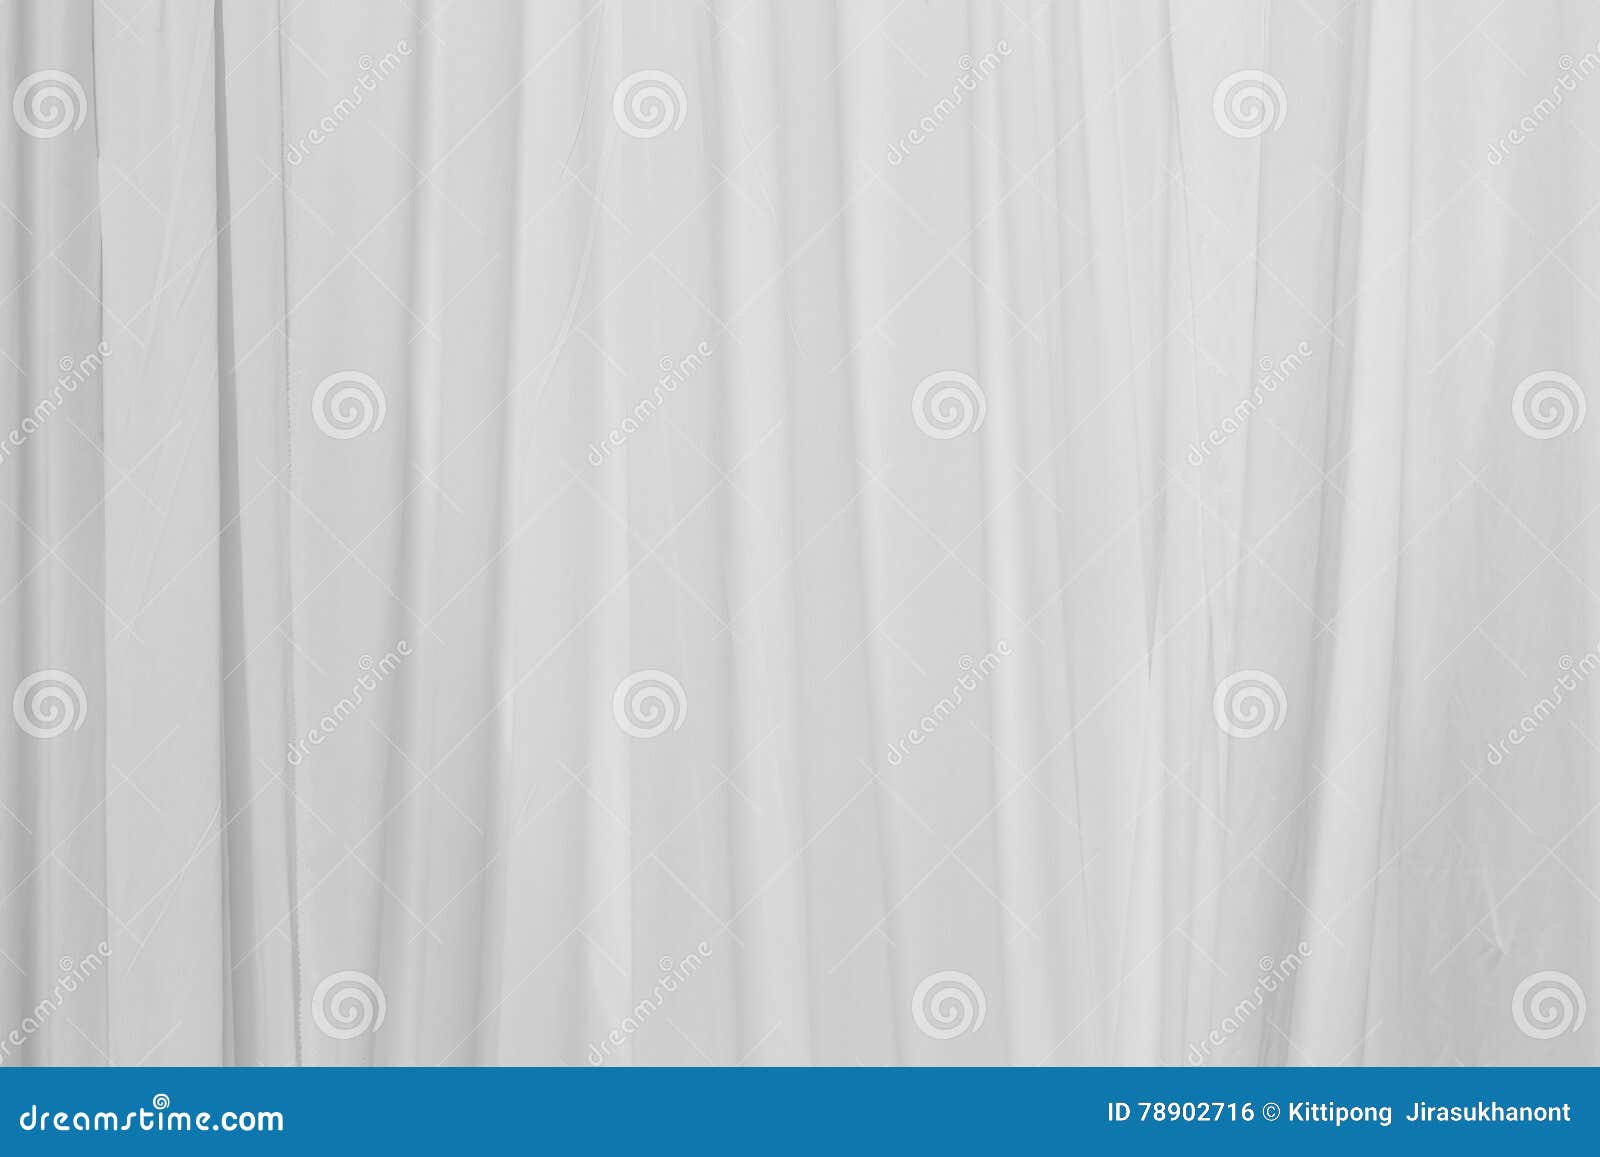 white pleat background